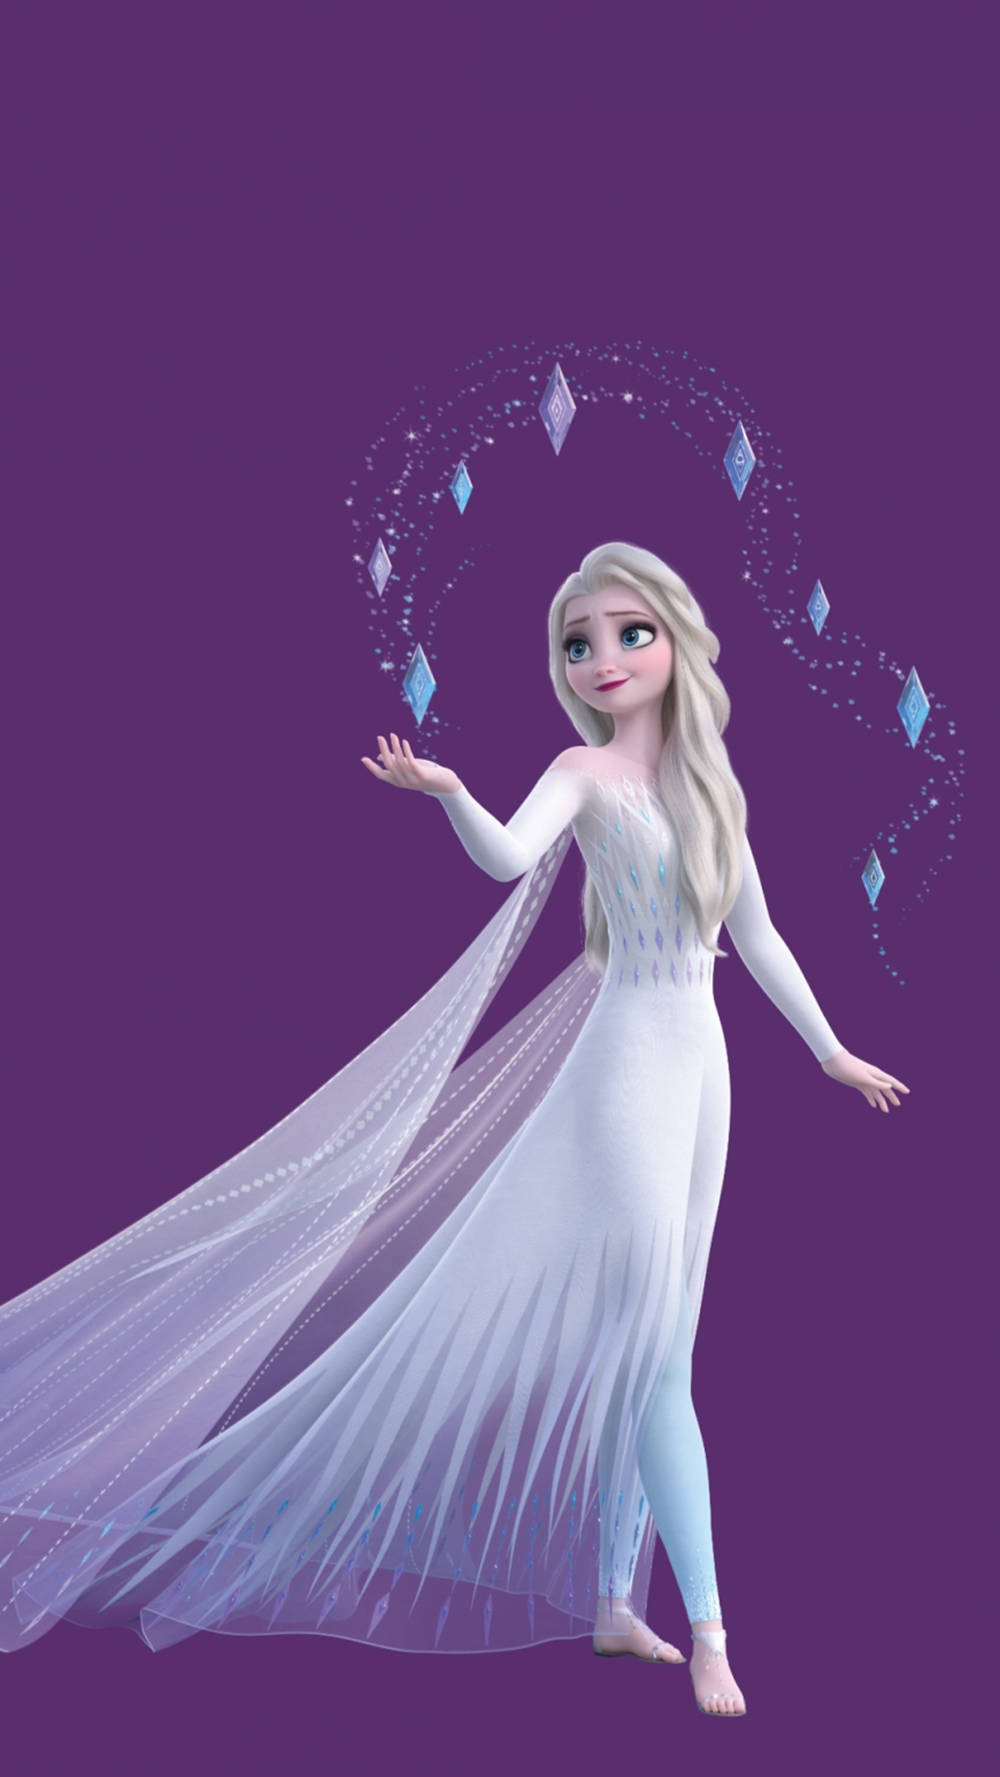 Fantastisk Elsa Frozen 2-motiv Wallpaper